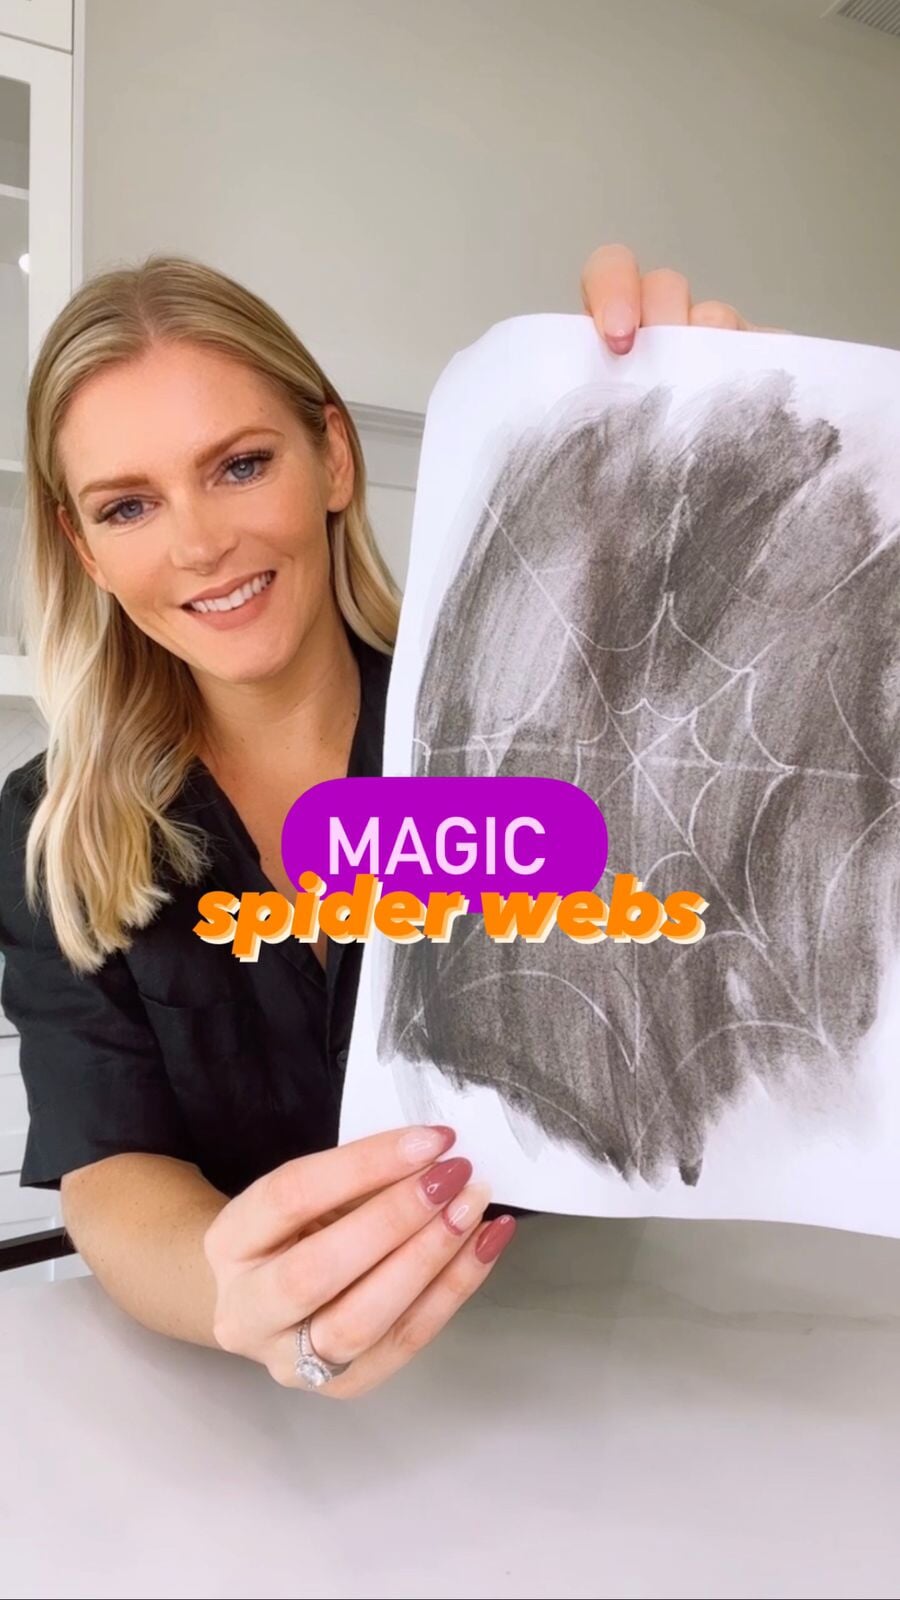 Magic Spider Web Painting Activity Kit